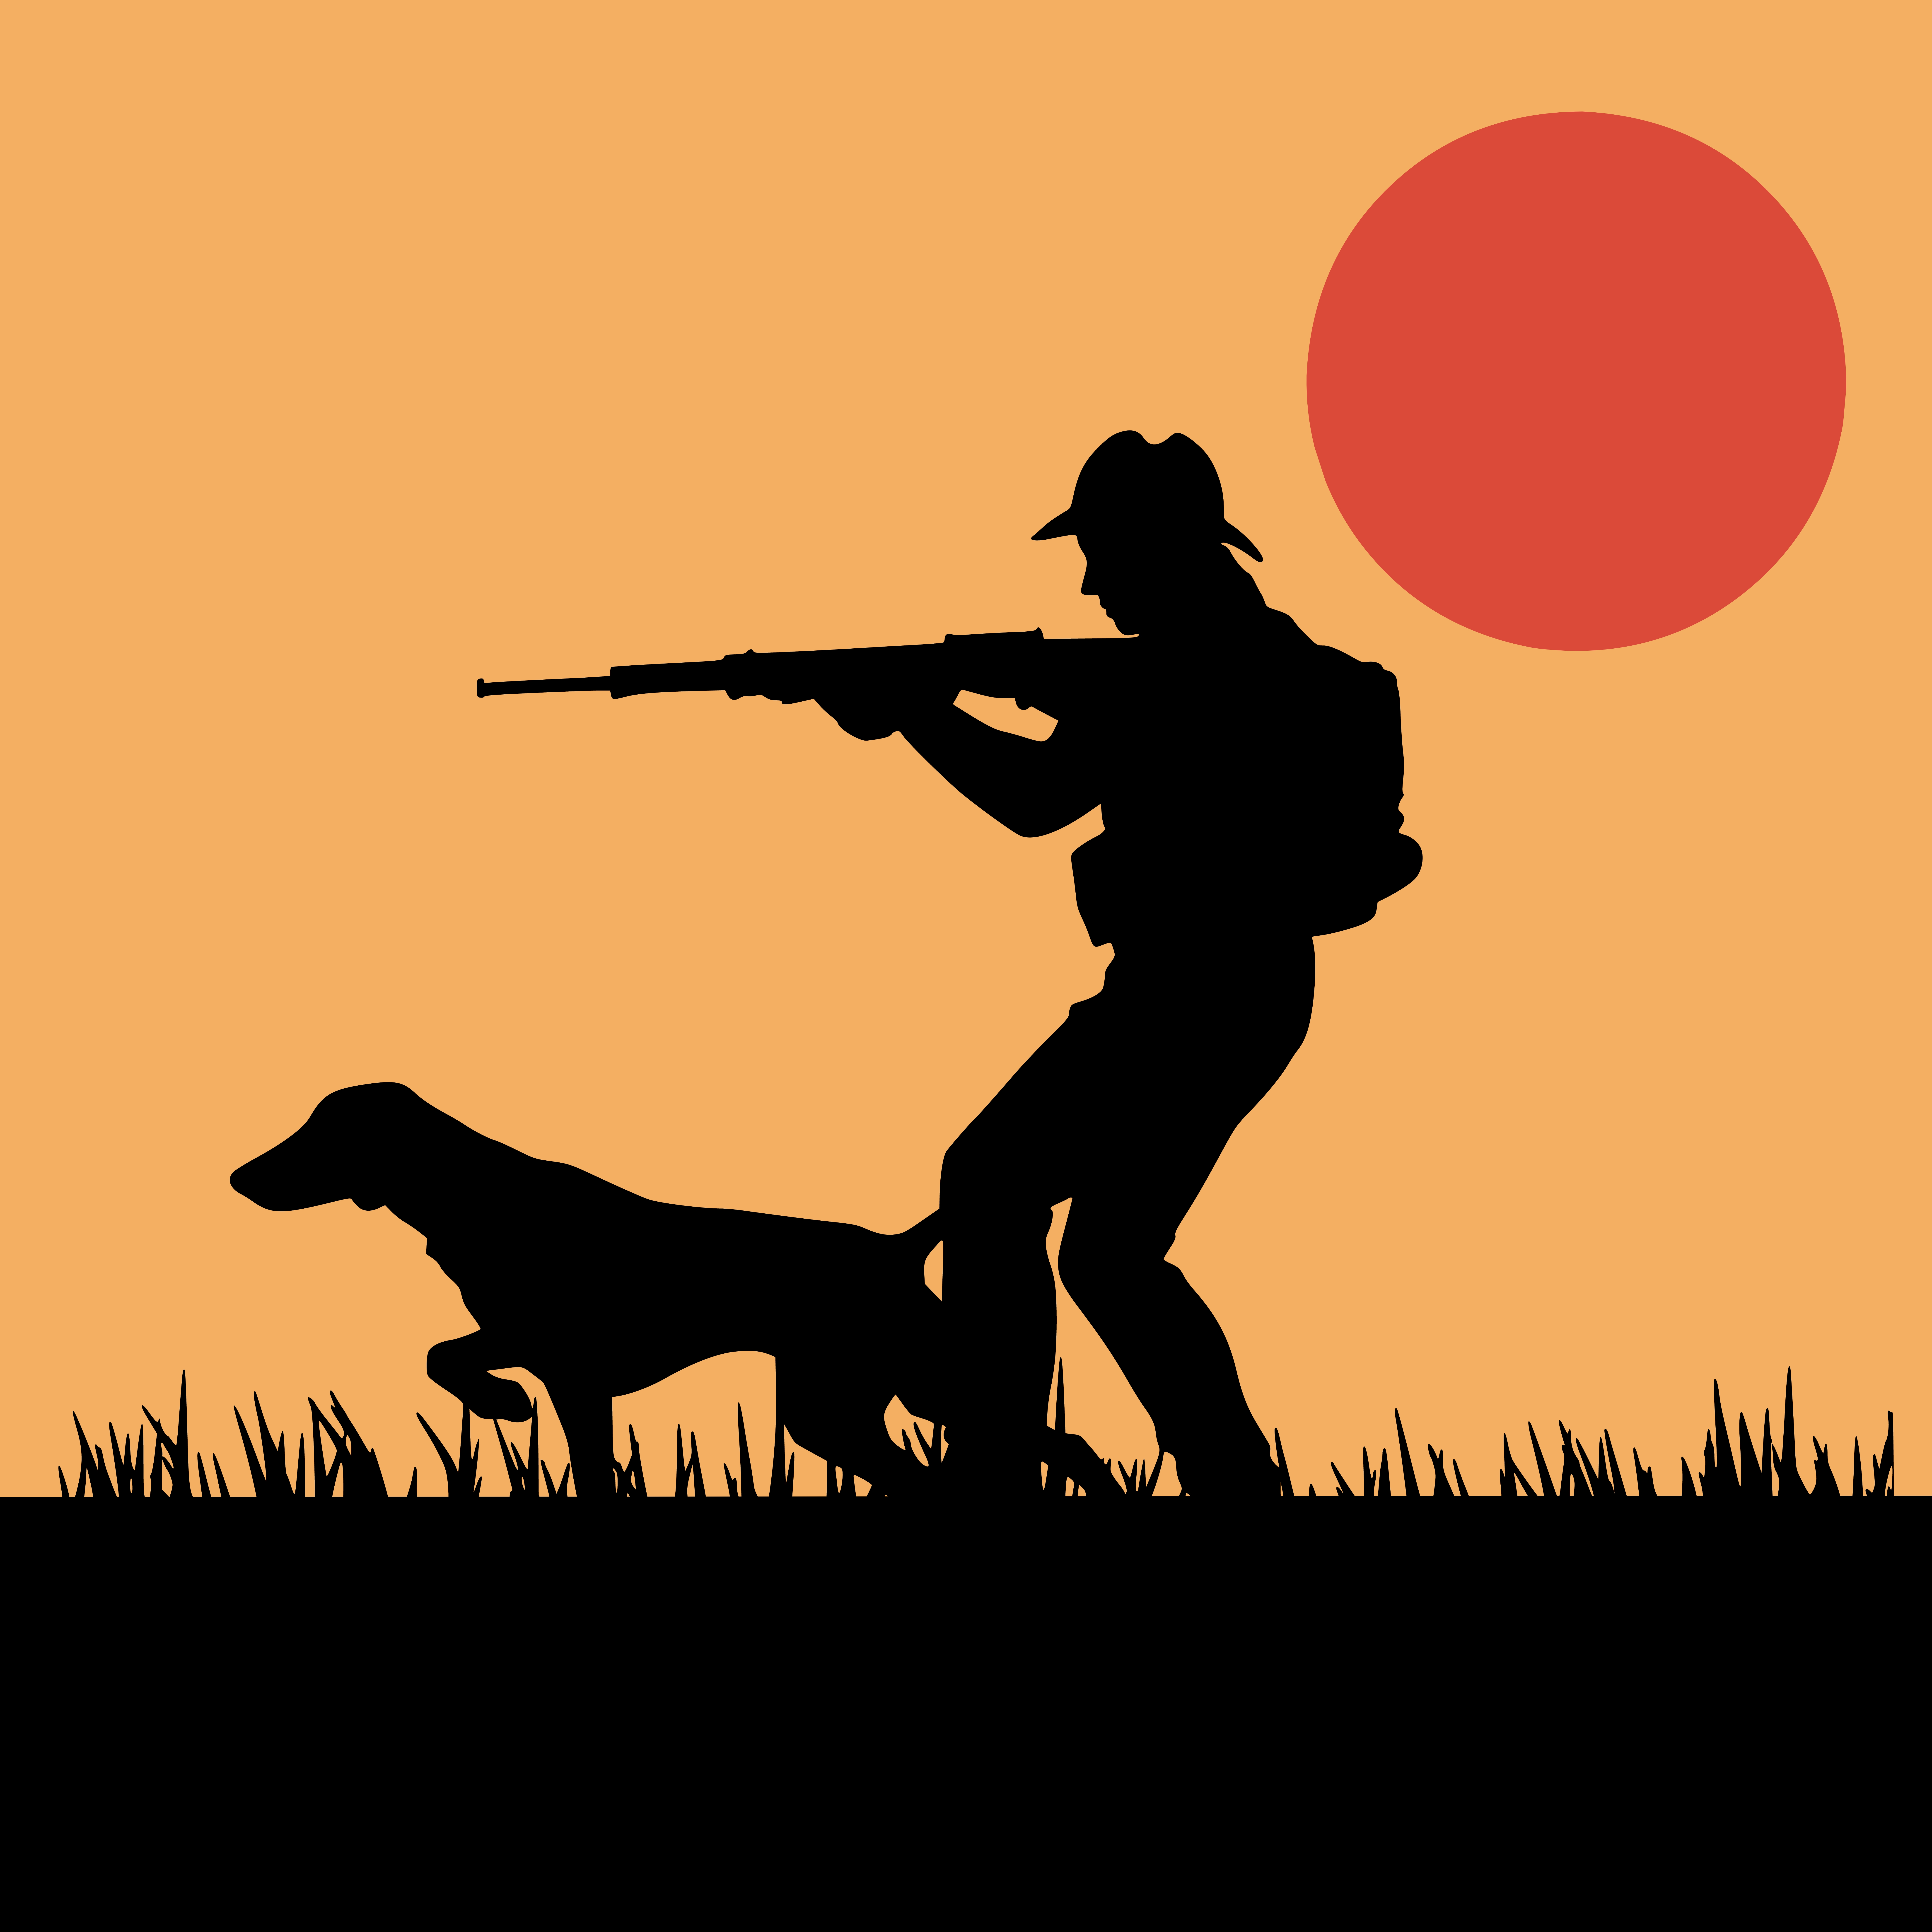 Hunting season silhouette design